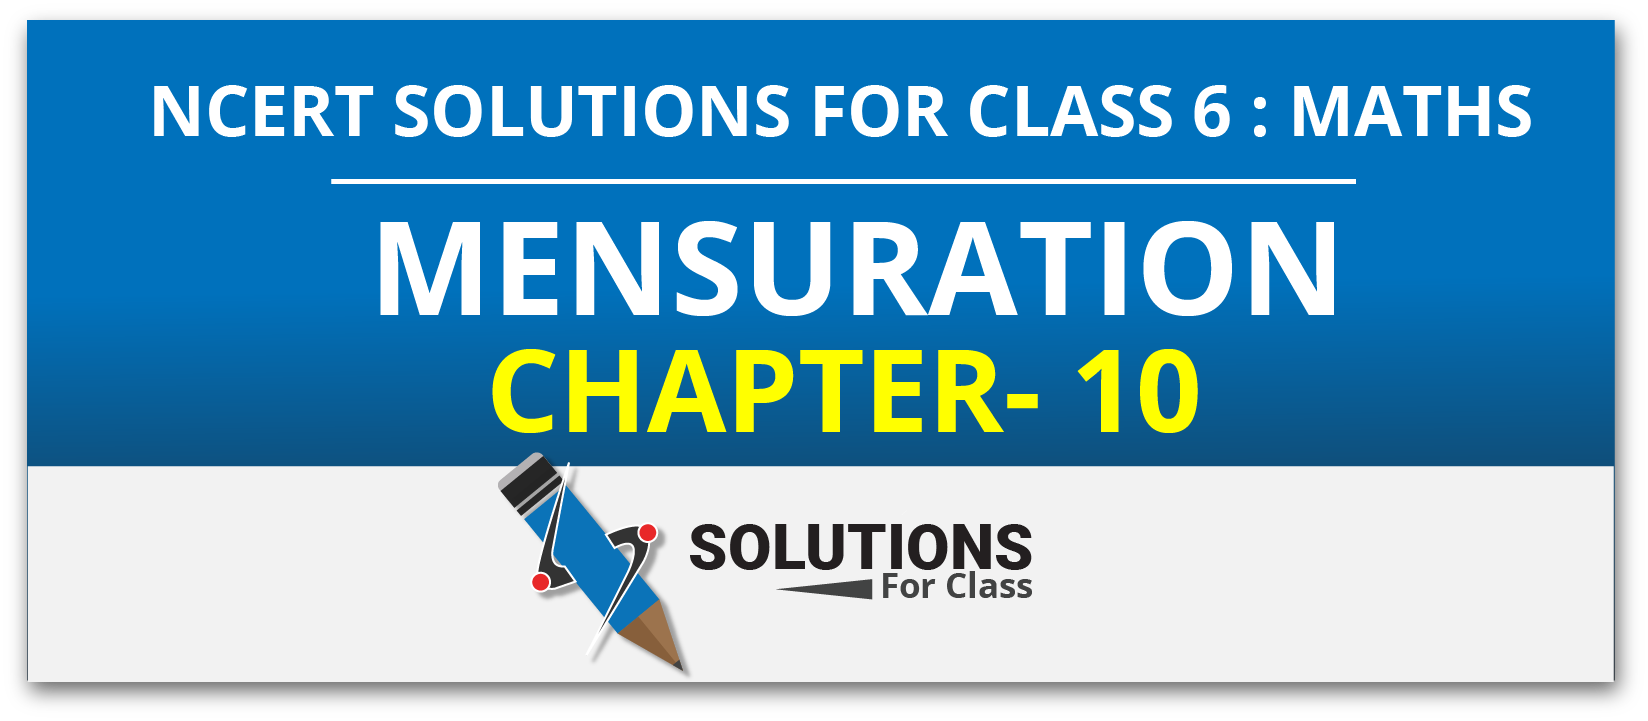 Mathematics NCERT solutions for class 6, Chapter 10 Mensuration